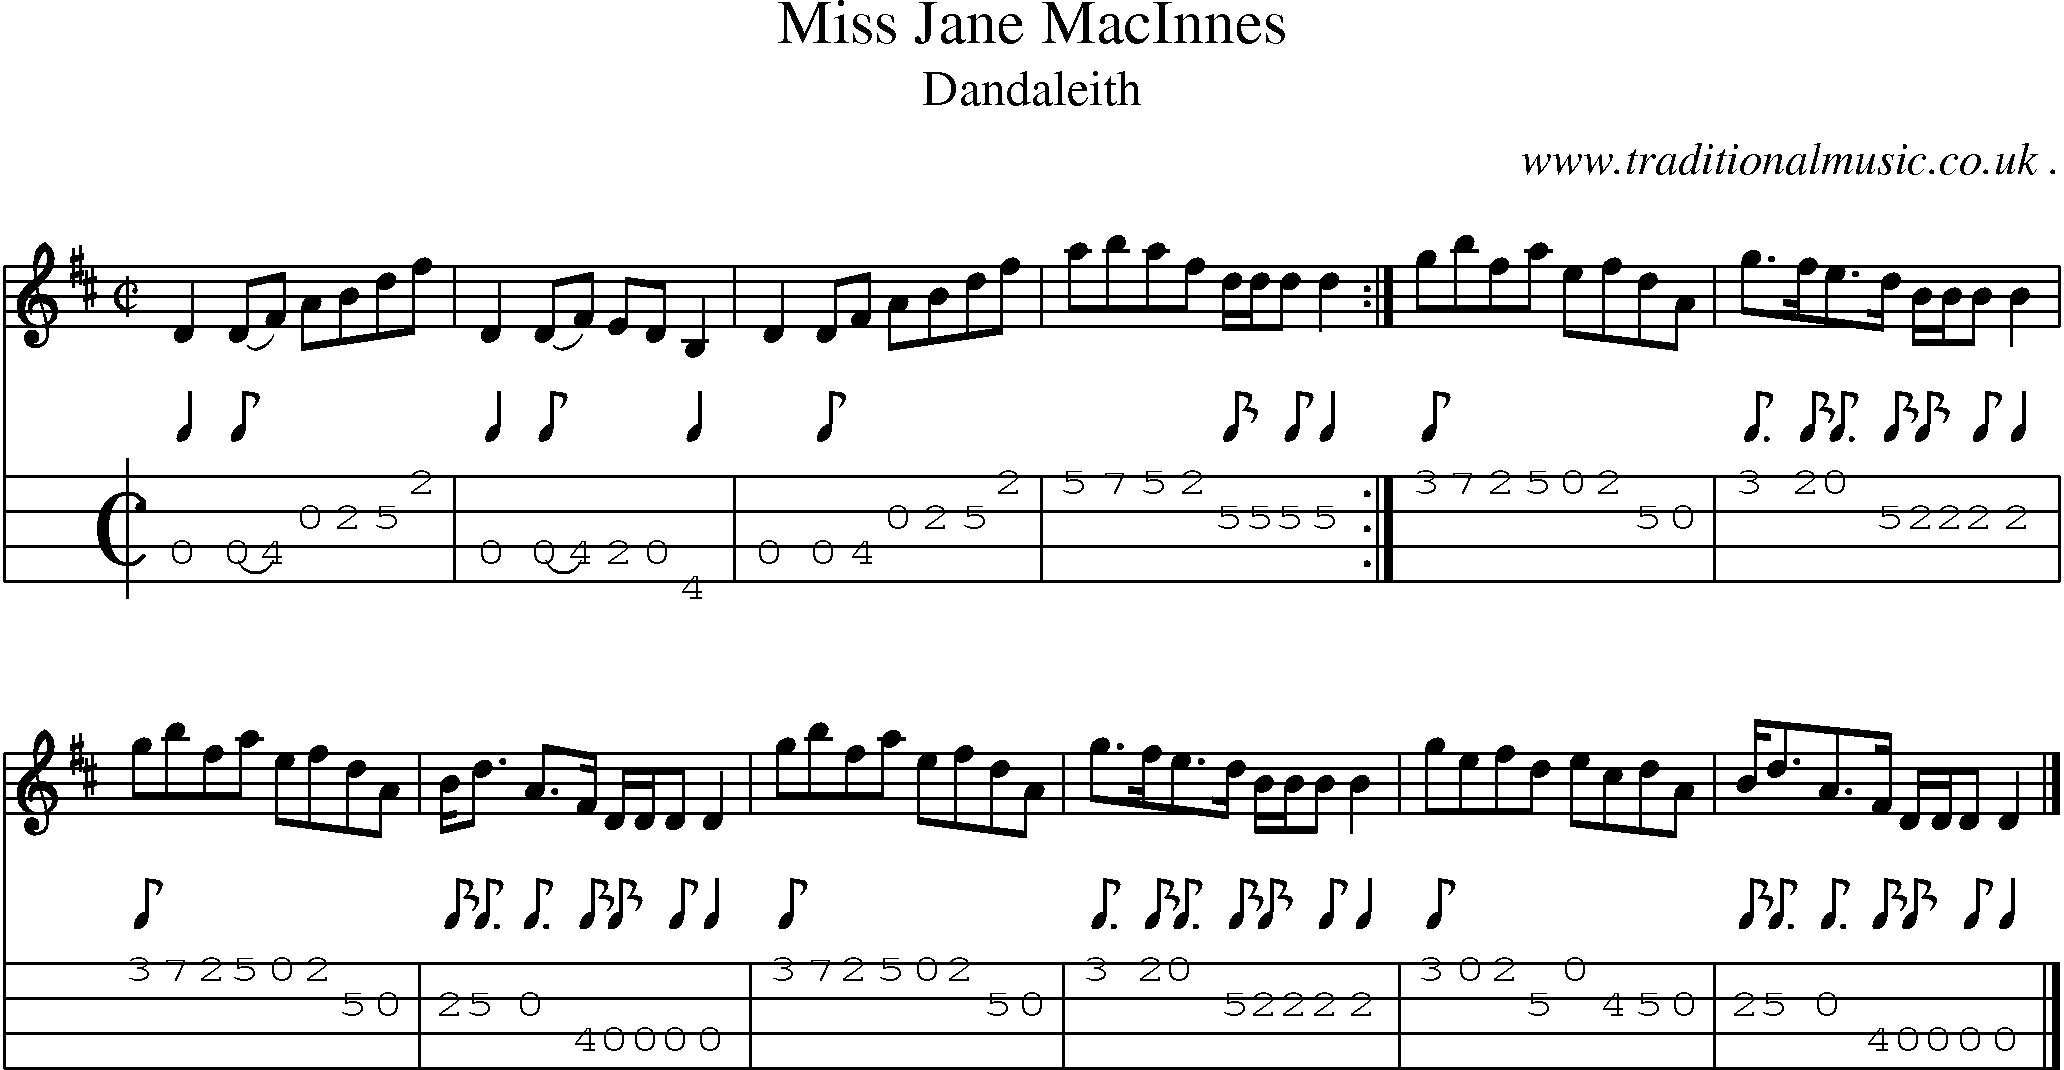 Sheet-music  score, Chords and Mandolin Tabs for Miss Jane Macinnes